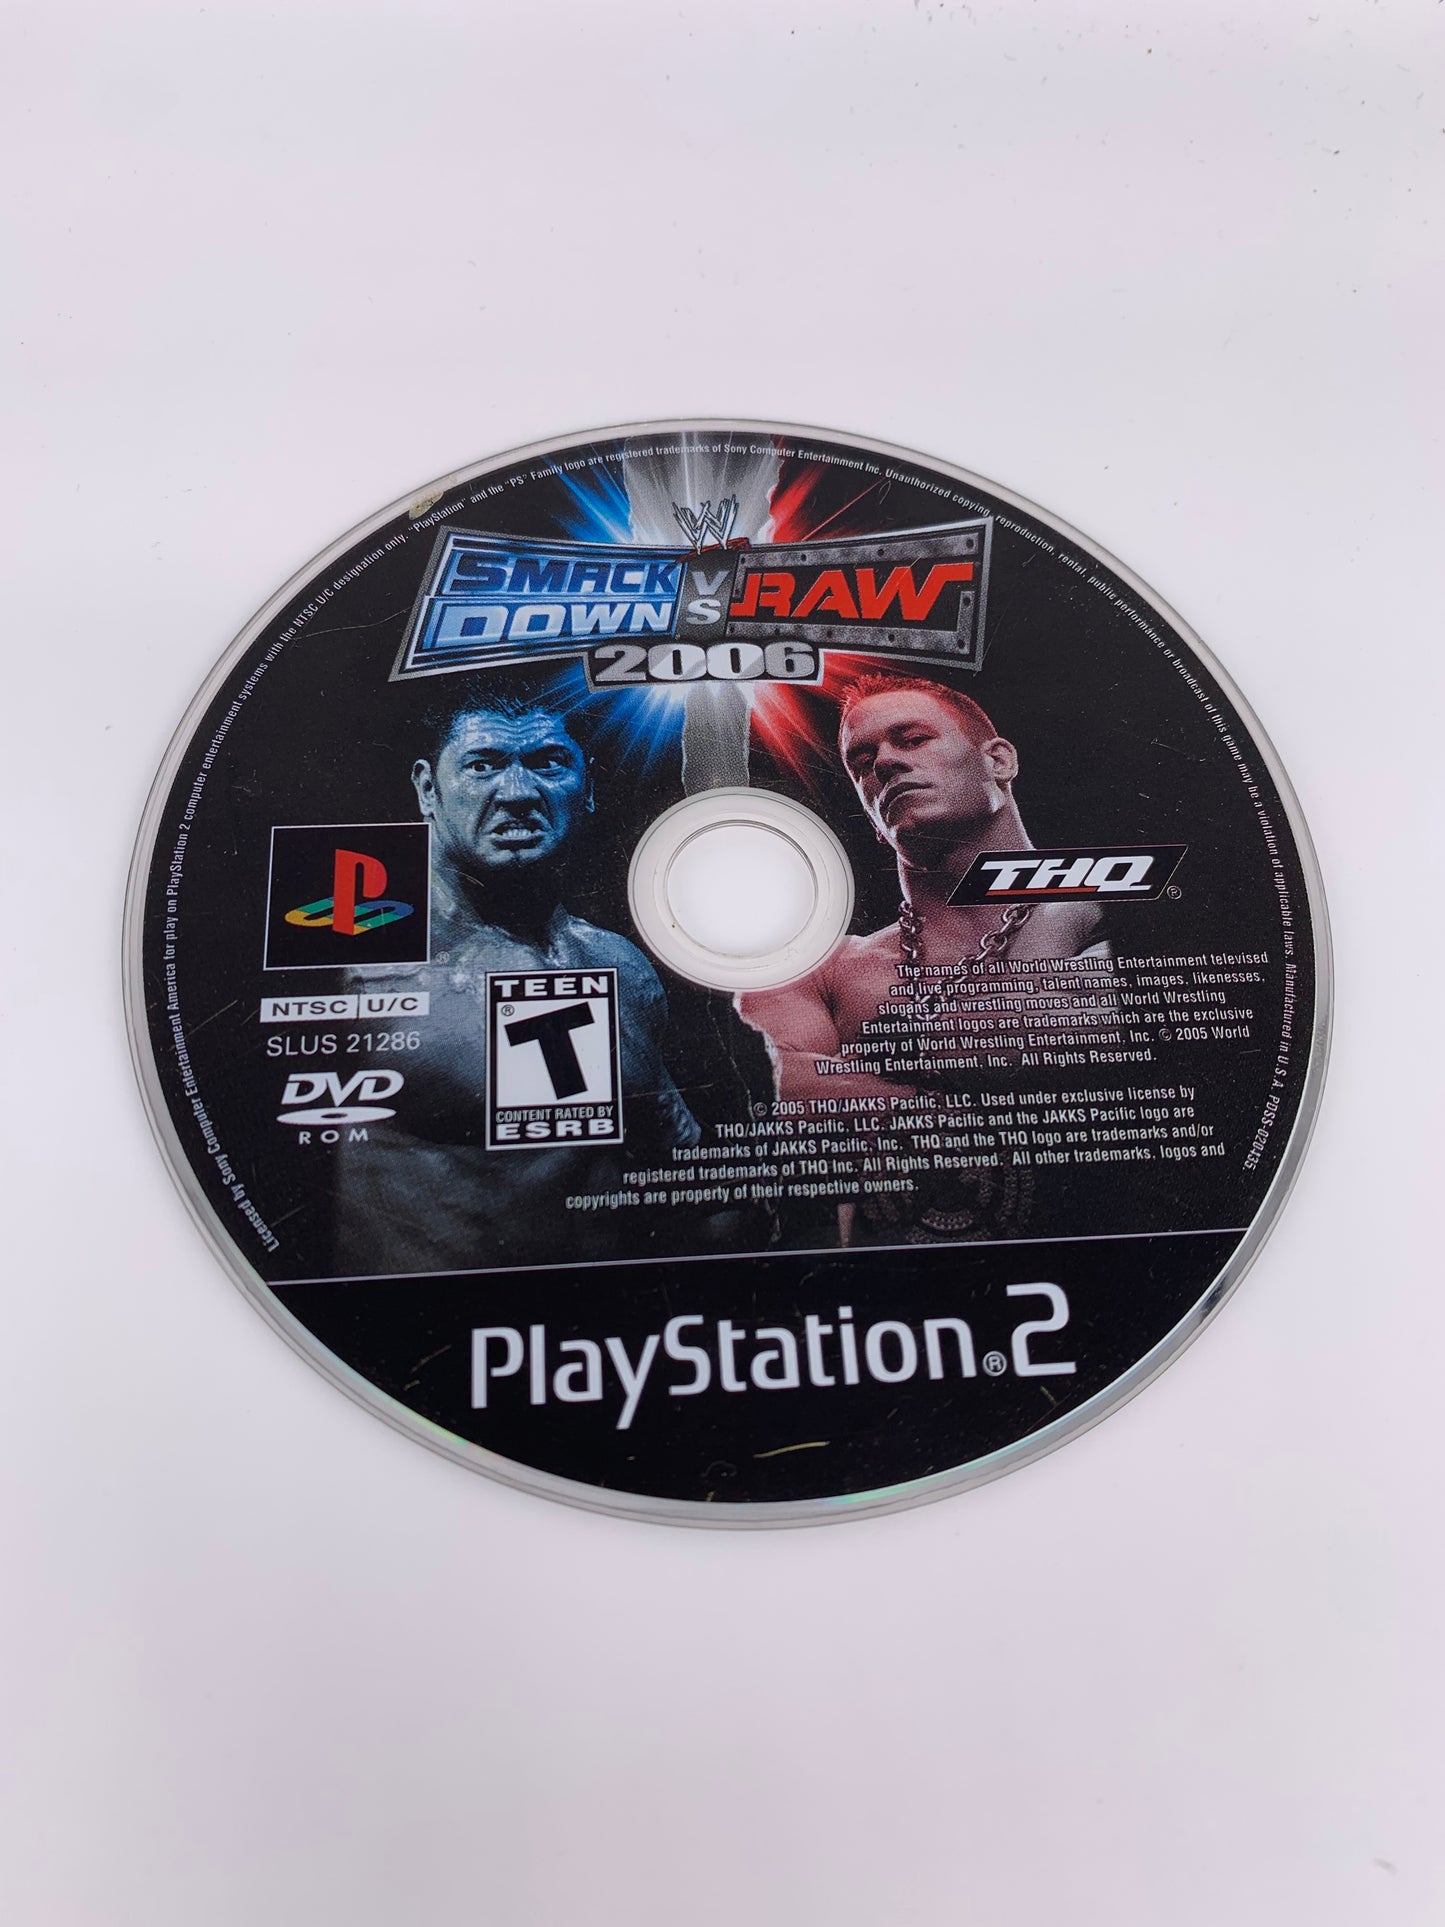 PiXEL-RETRO.COM : SONY PLAYSTATION 2 (PS2) COMPLET CIB BOX MANUAL GAME NTSC WWE SMACKDOWN VS RAW 2006